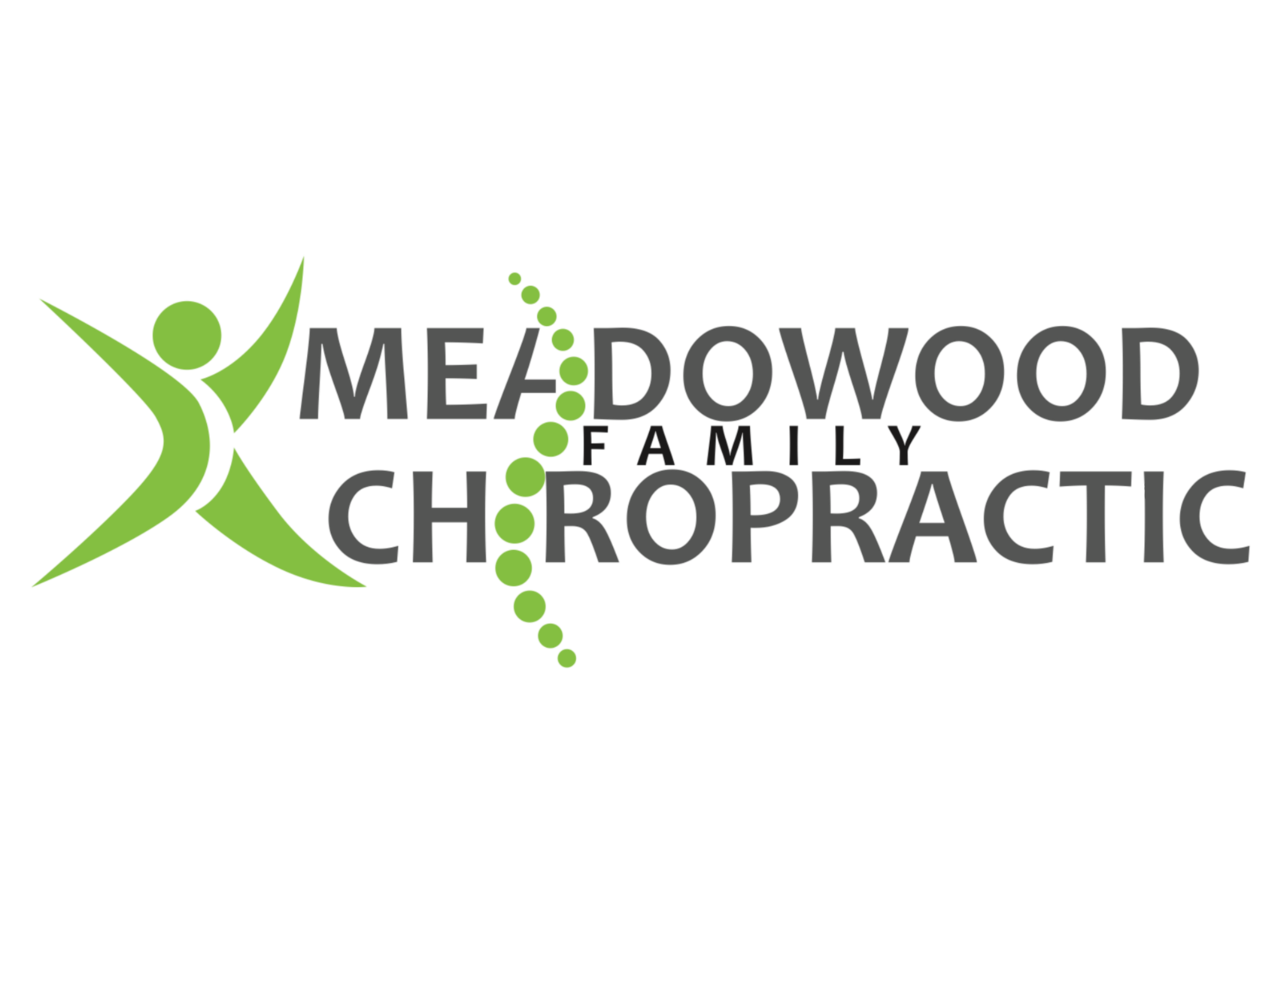 Meadowood Chiropractic